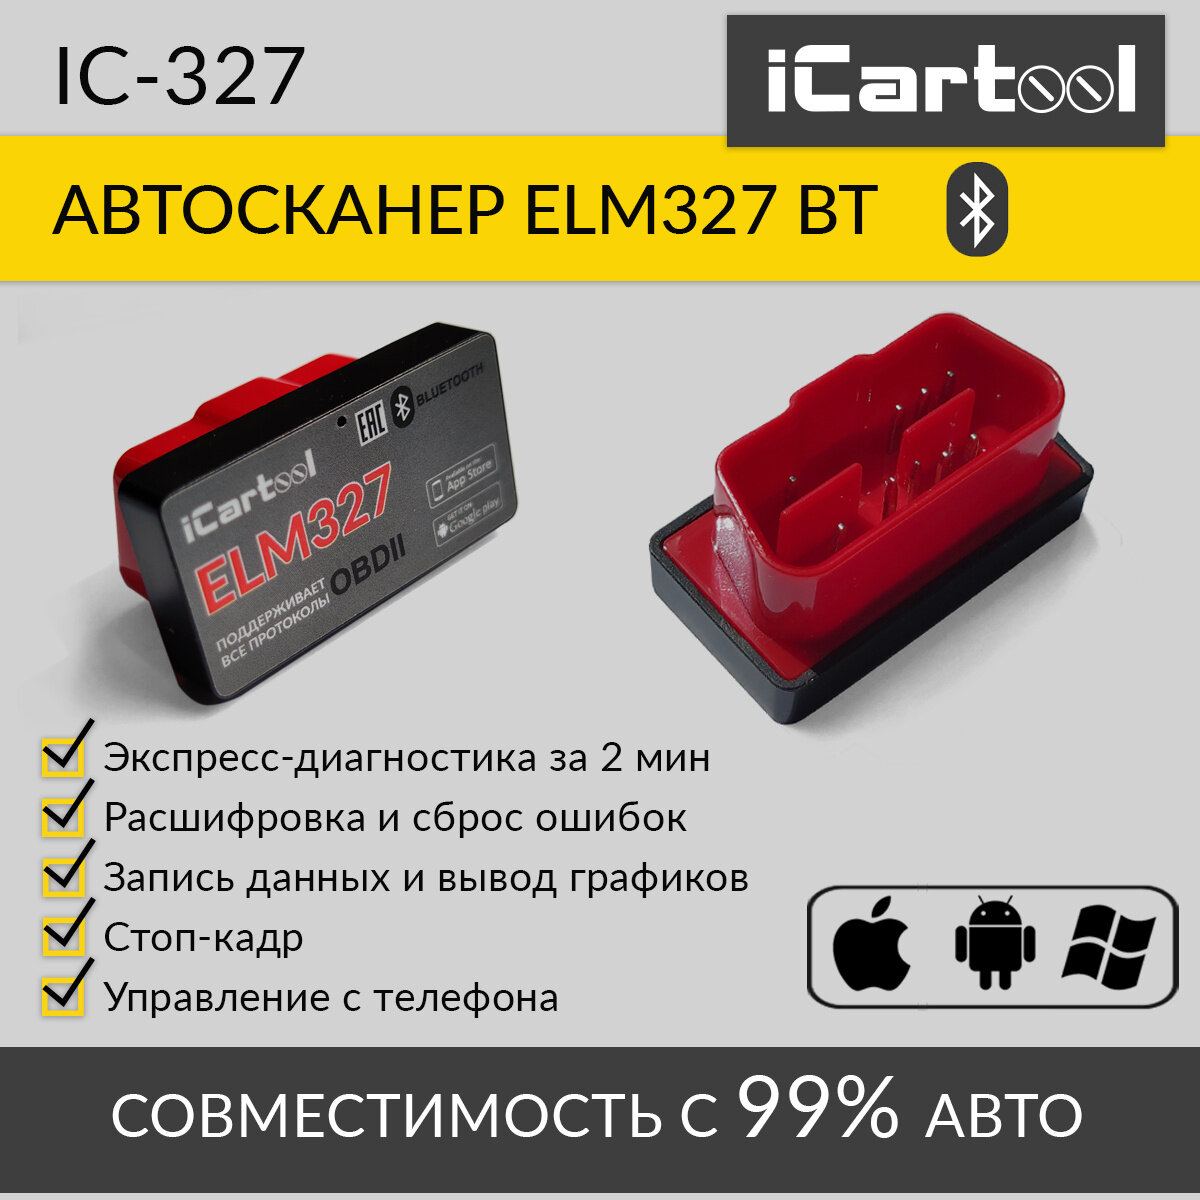 ICartool Адаптер диагностический ELM327 BT Android / IOS IC-327